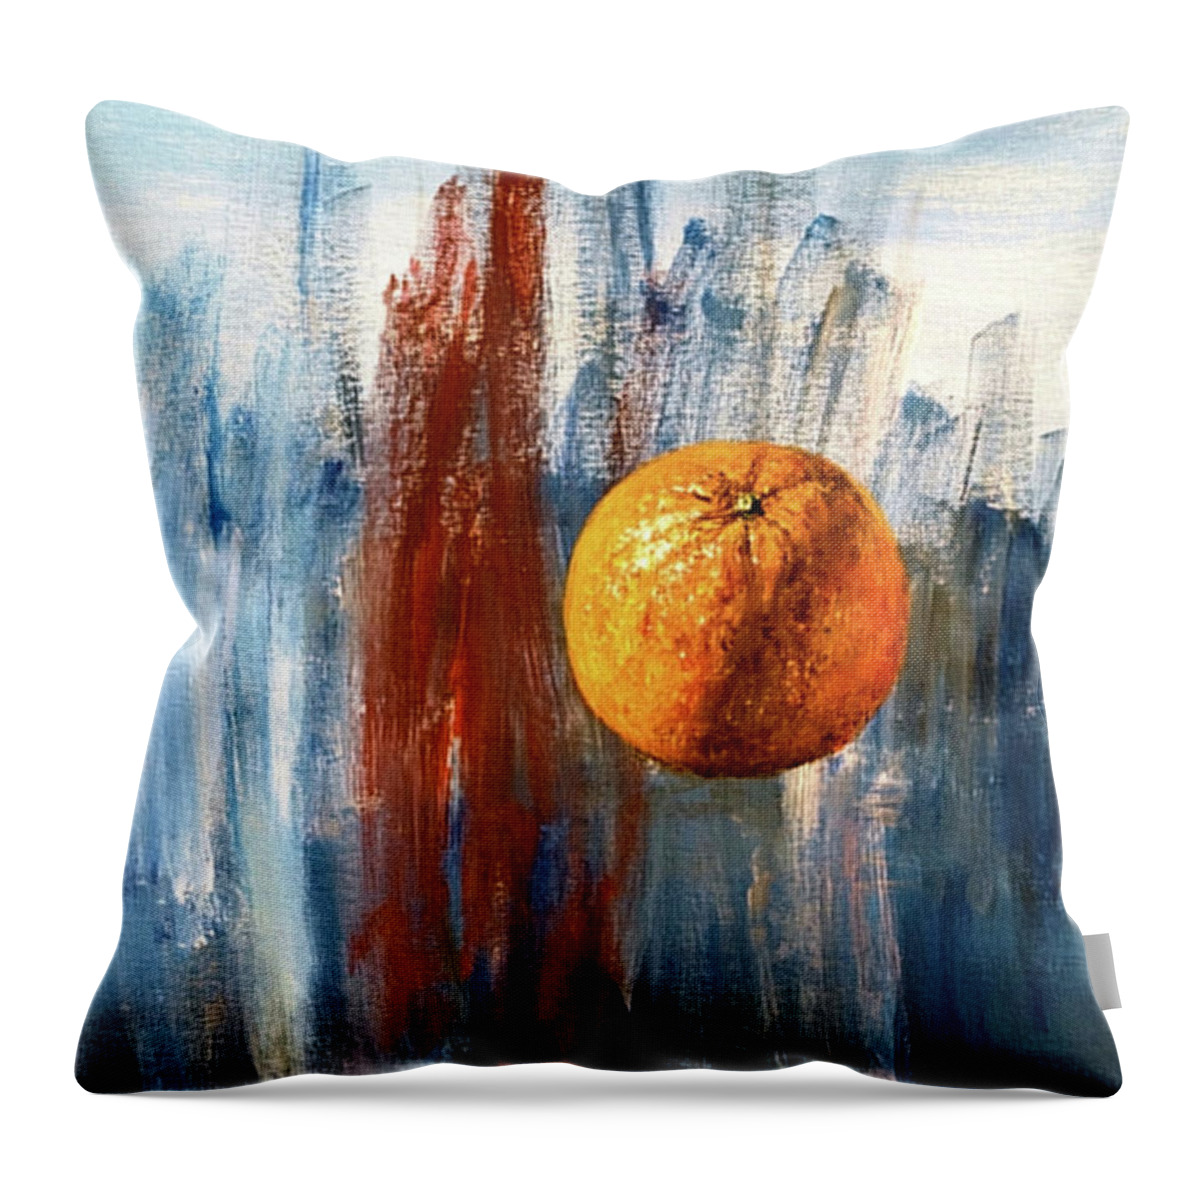 Orange Throw Pillow featuring the painting Orange by Arturas Slapsys